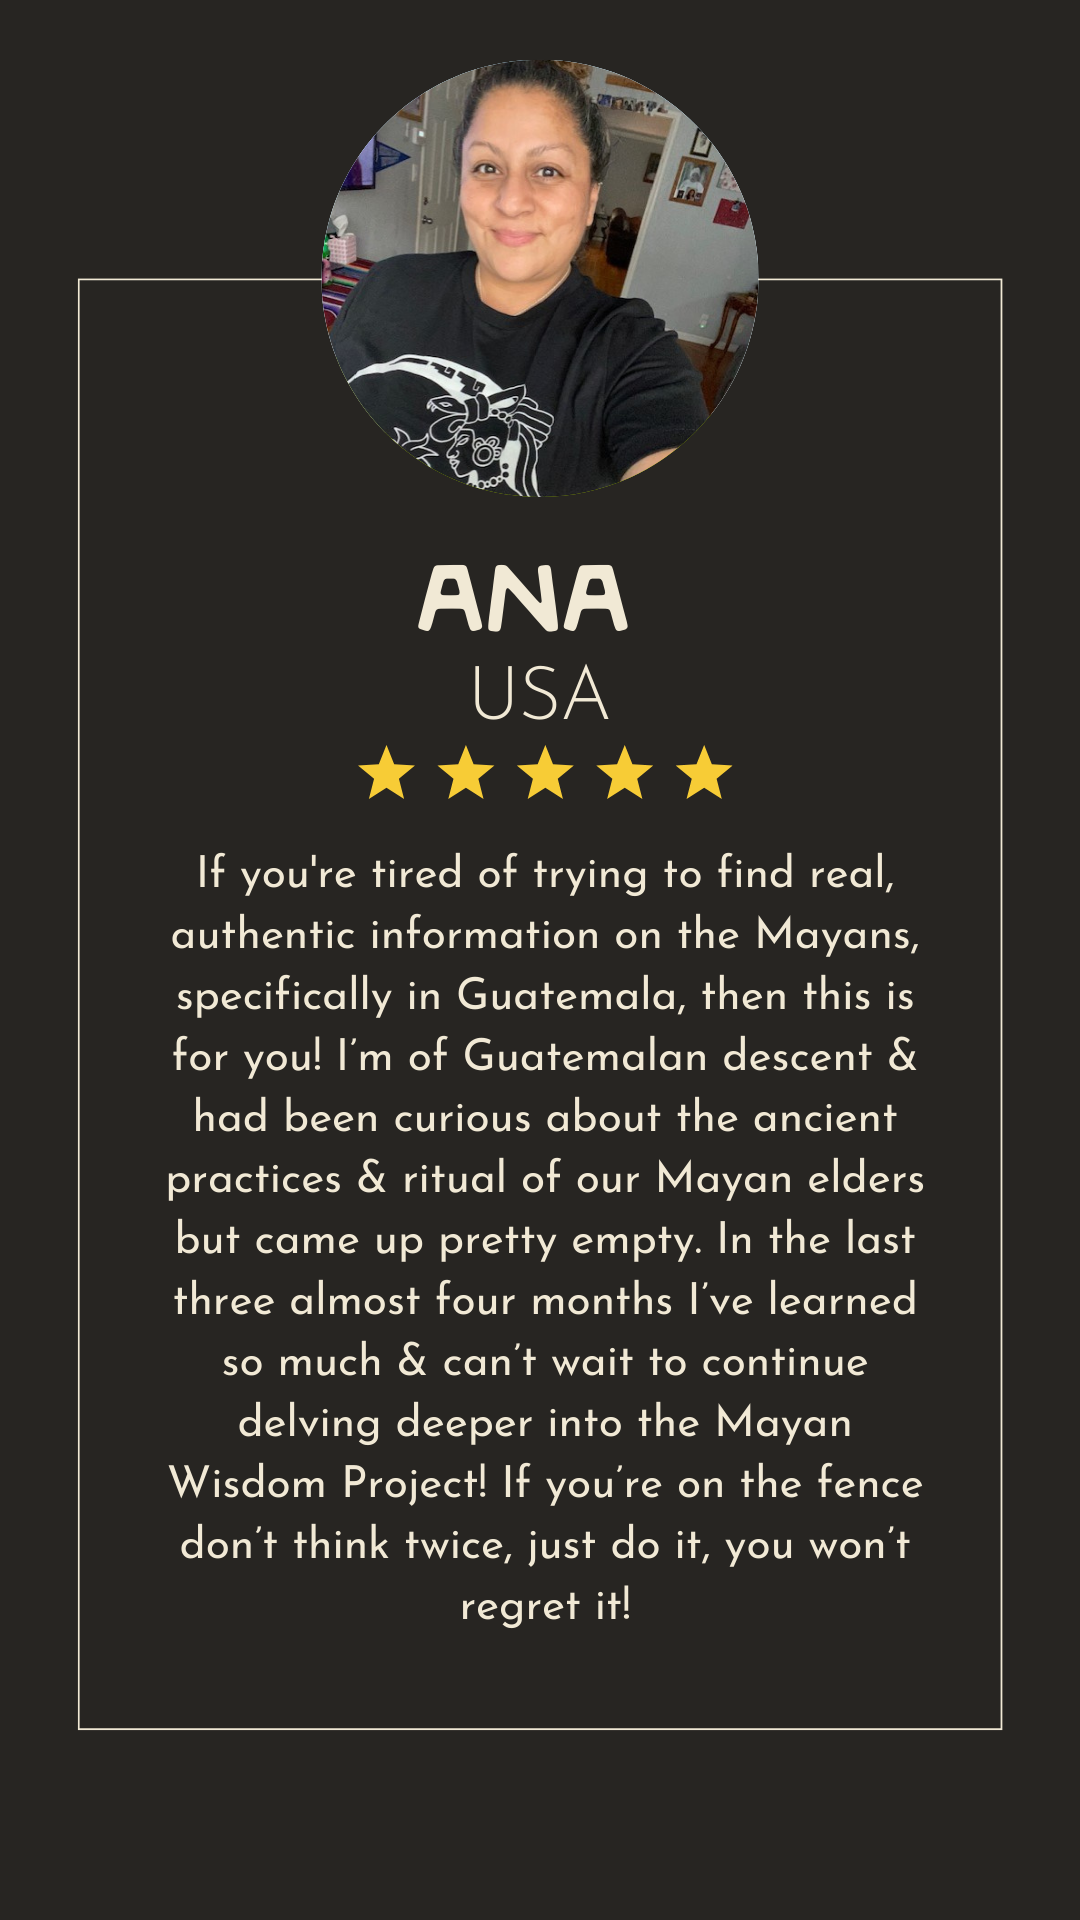 Ana amazing feedback regarding the mayan wisdom project.